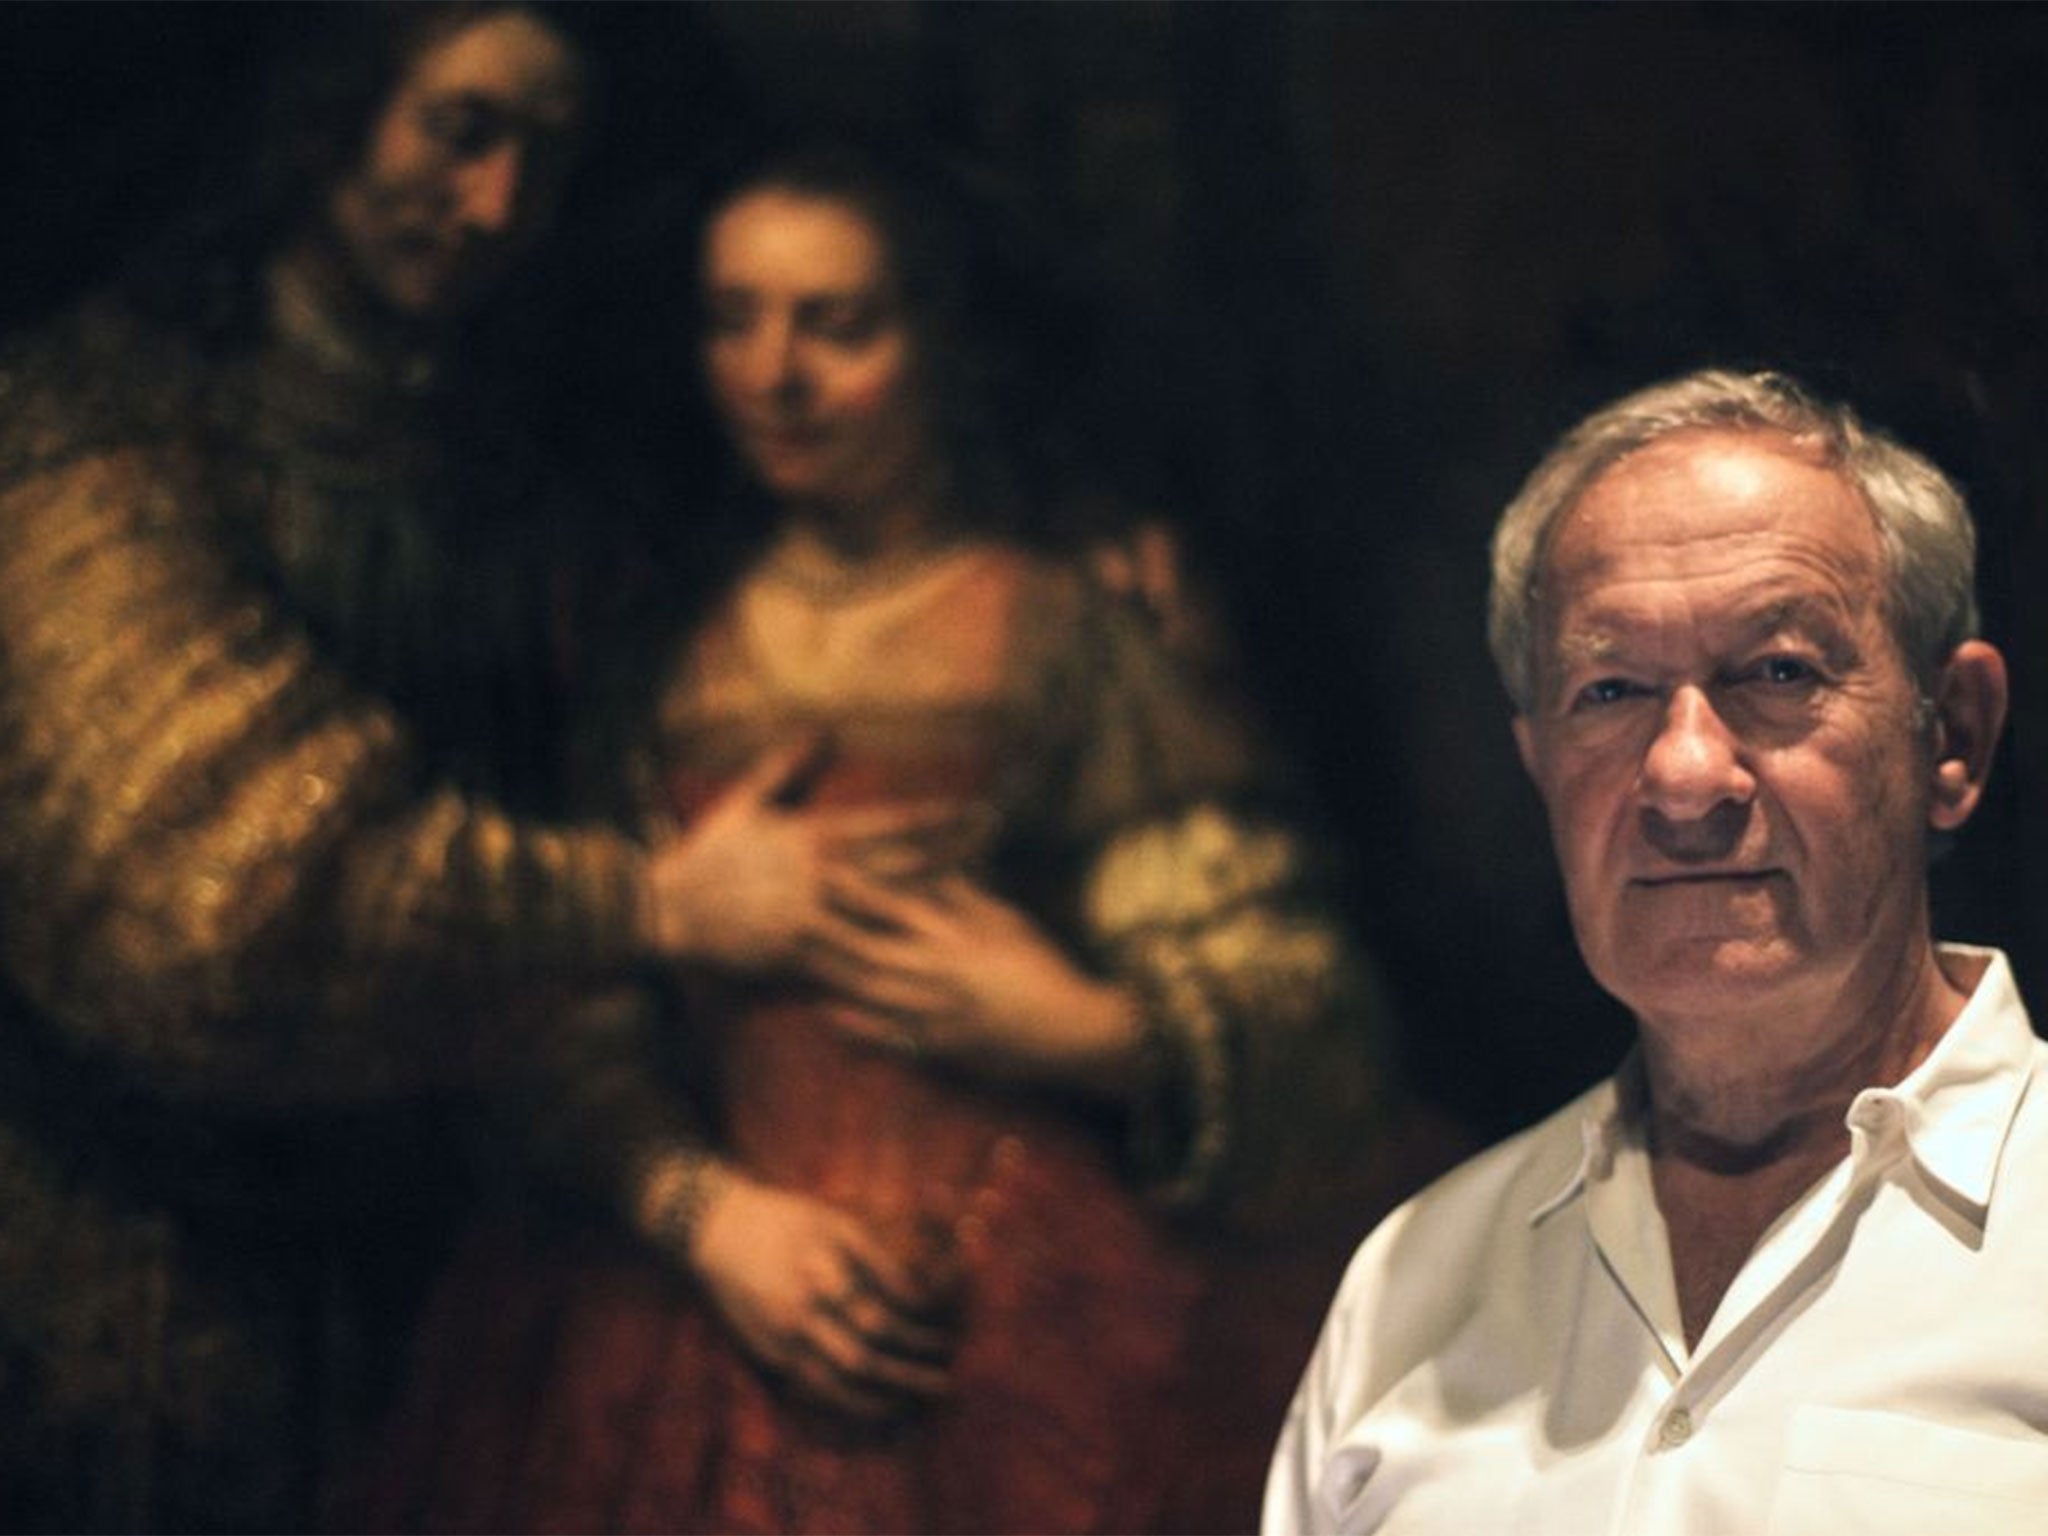 Wedding crasher: Simon Schama with Rembrandt’s ‘The Jewish Bride’ (c1665)